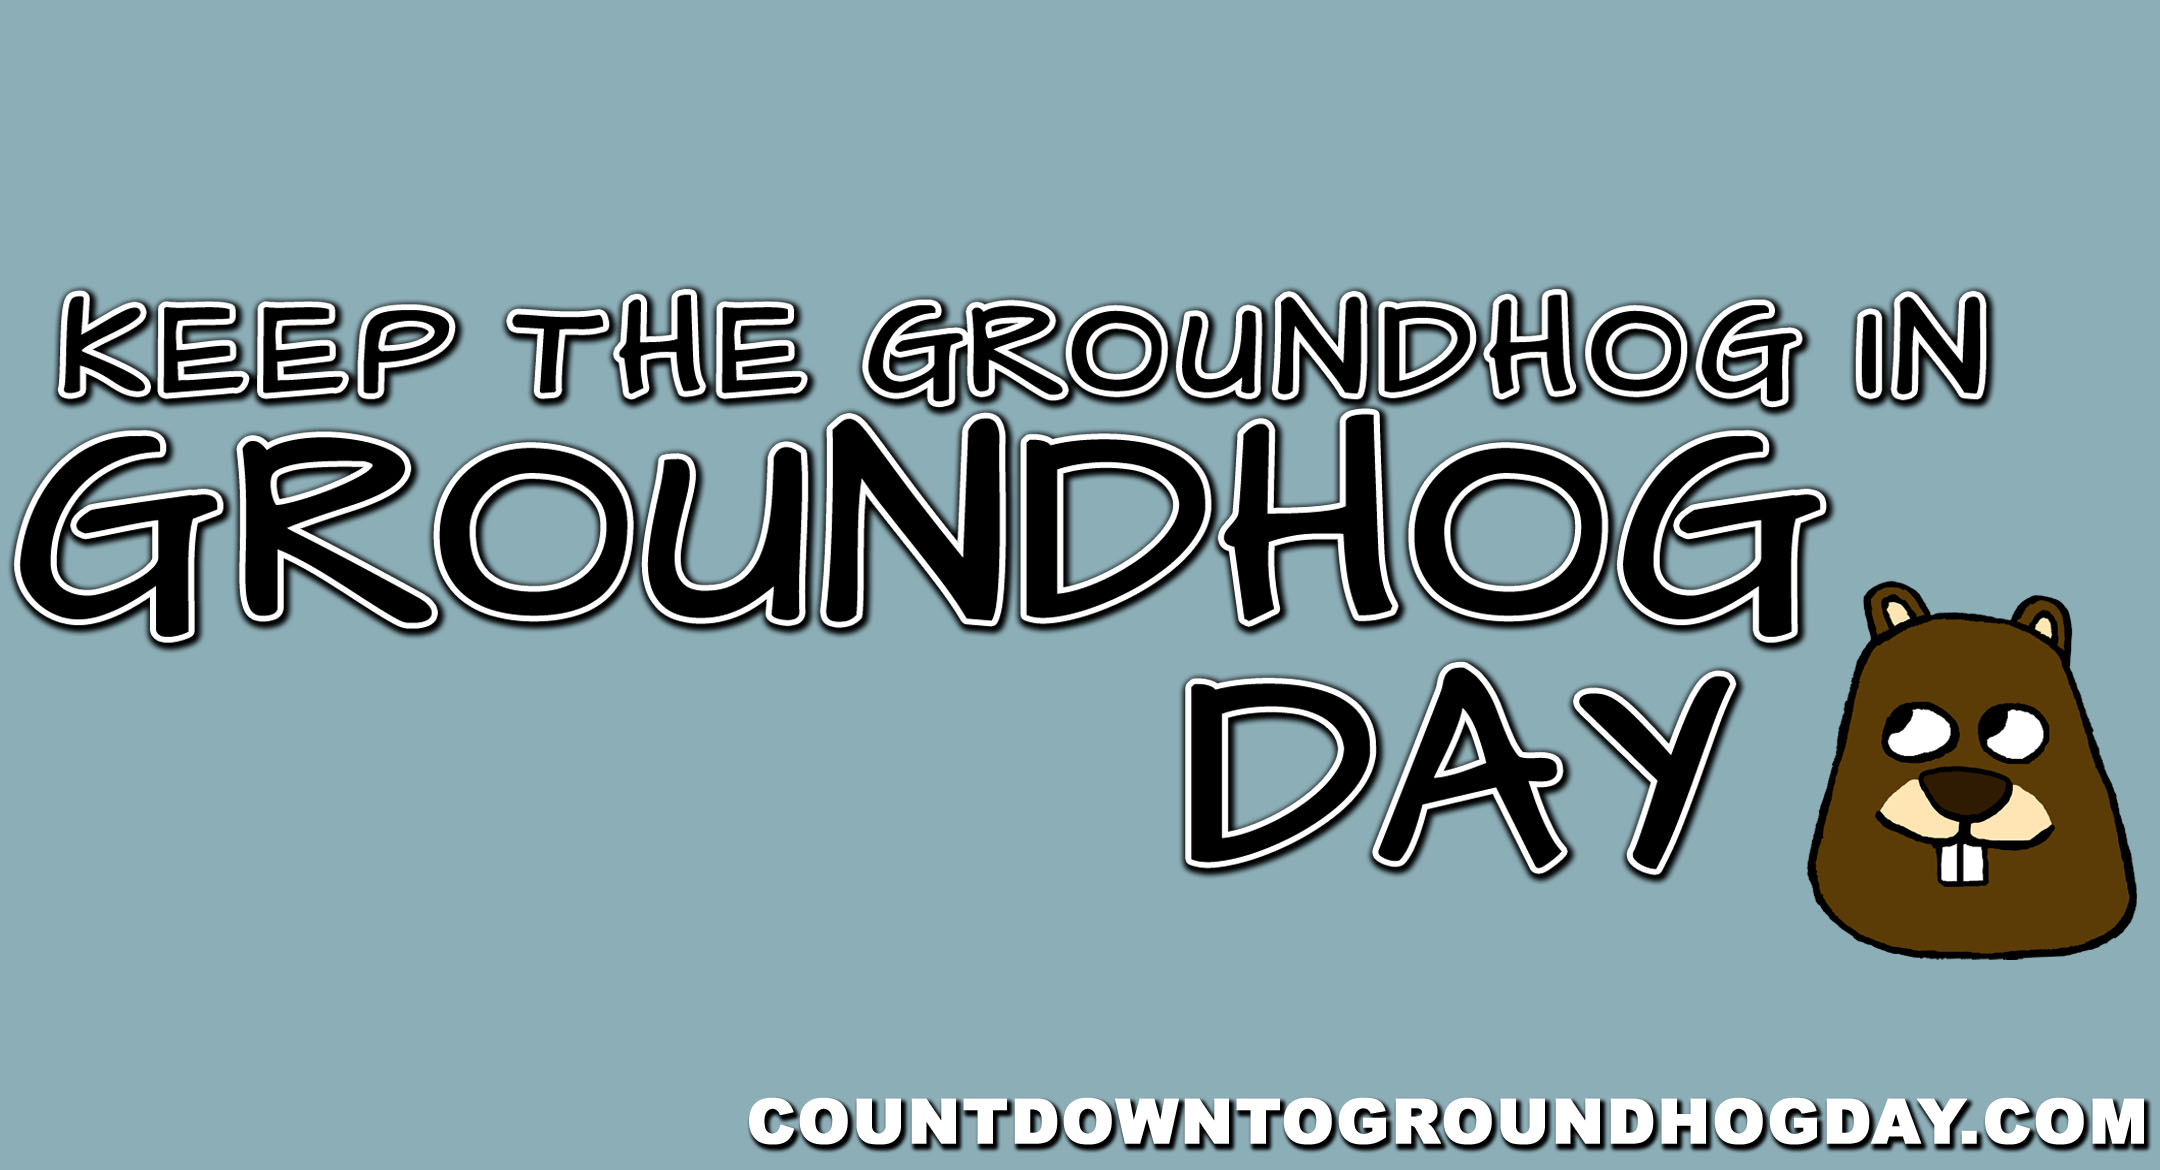 Keep the groundhog in Groundhog Day